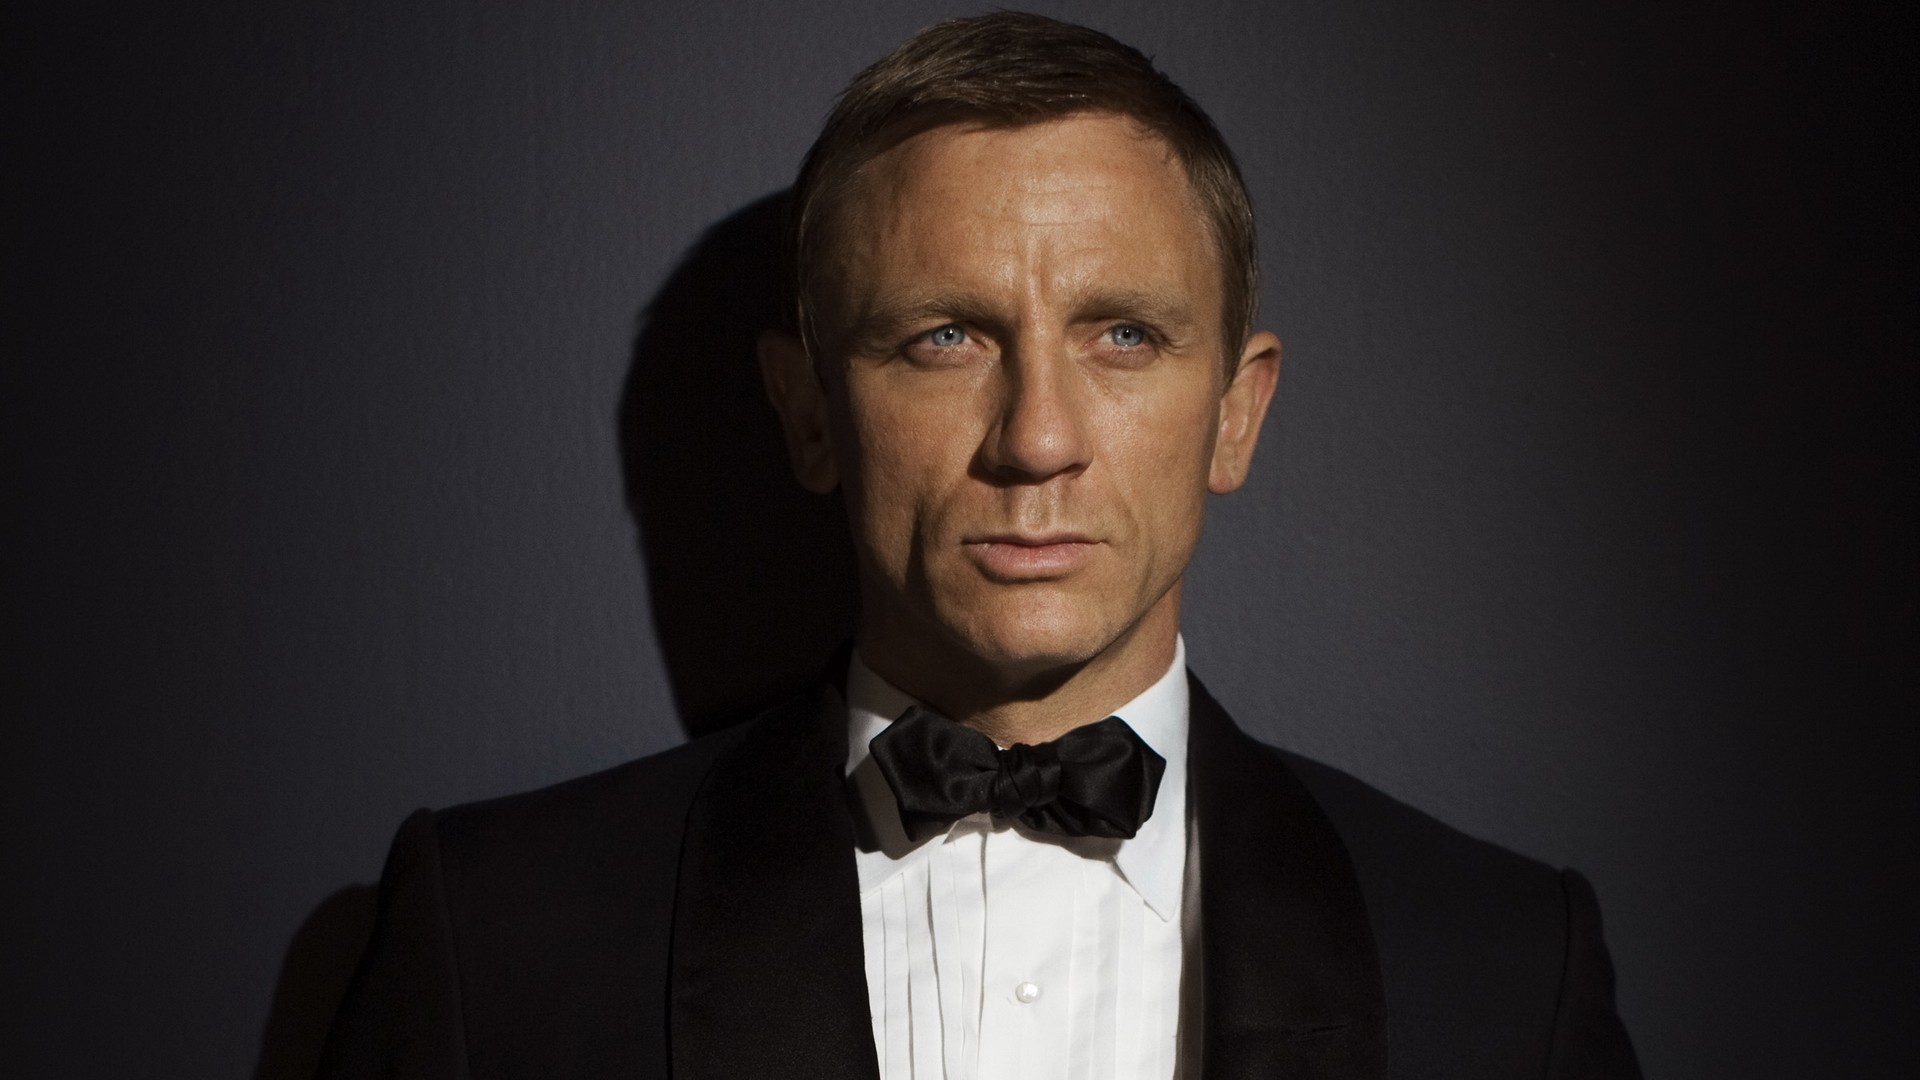 People 1920x1080 Daniel Craig actor tuxedo men movies James Bond simple background closeup